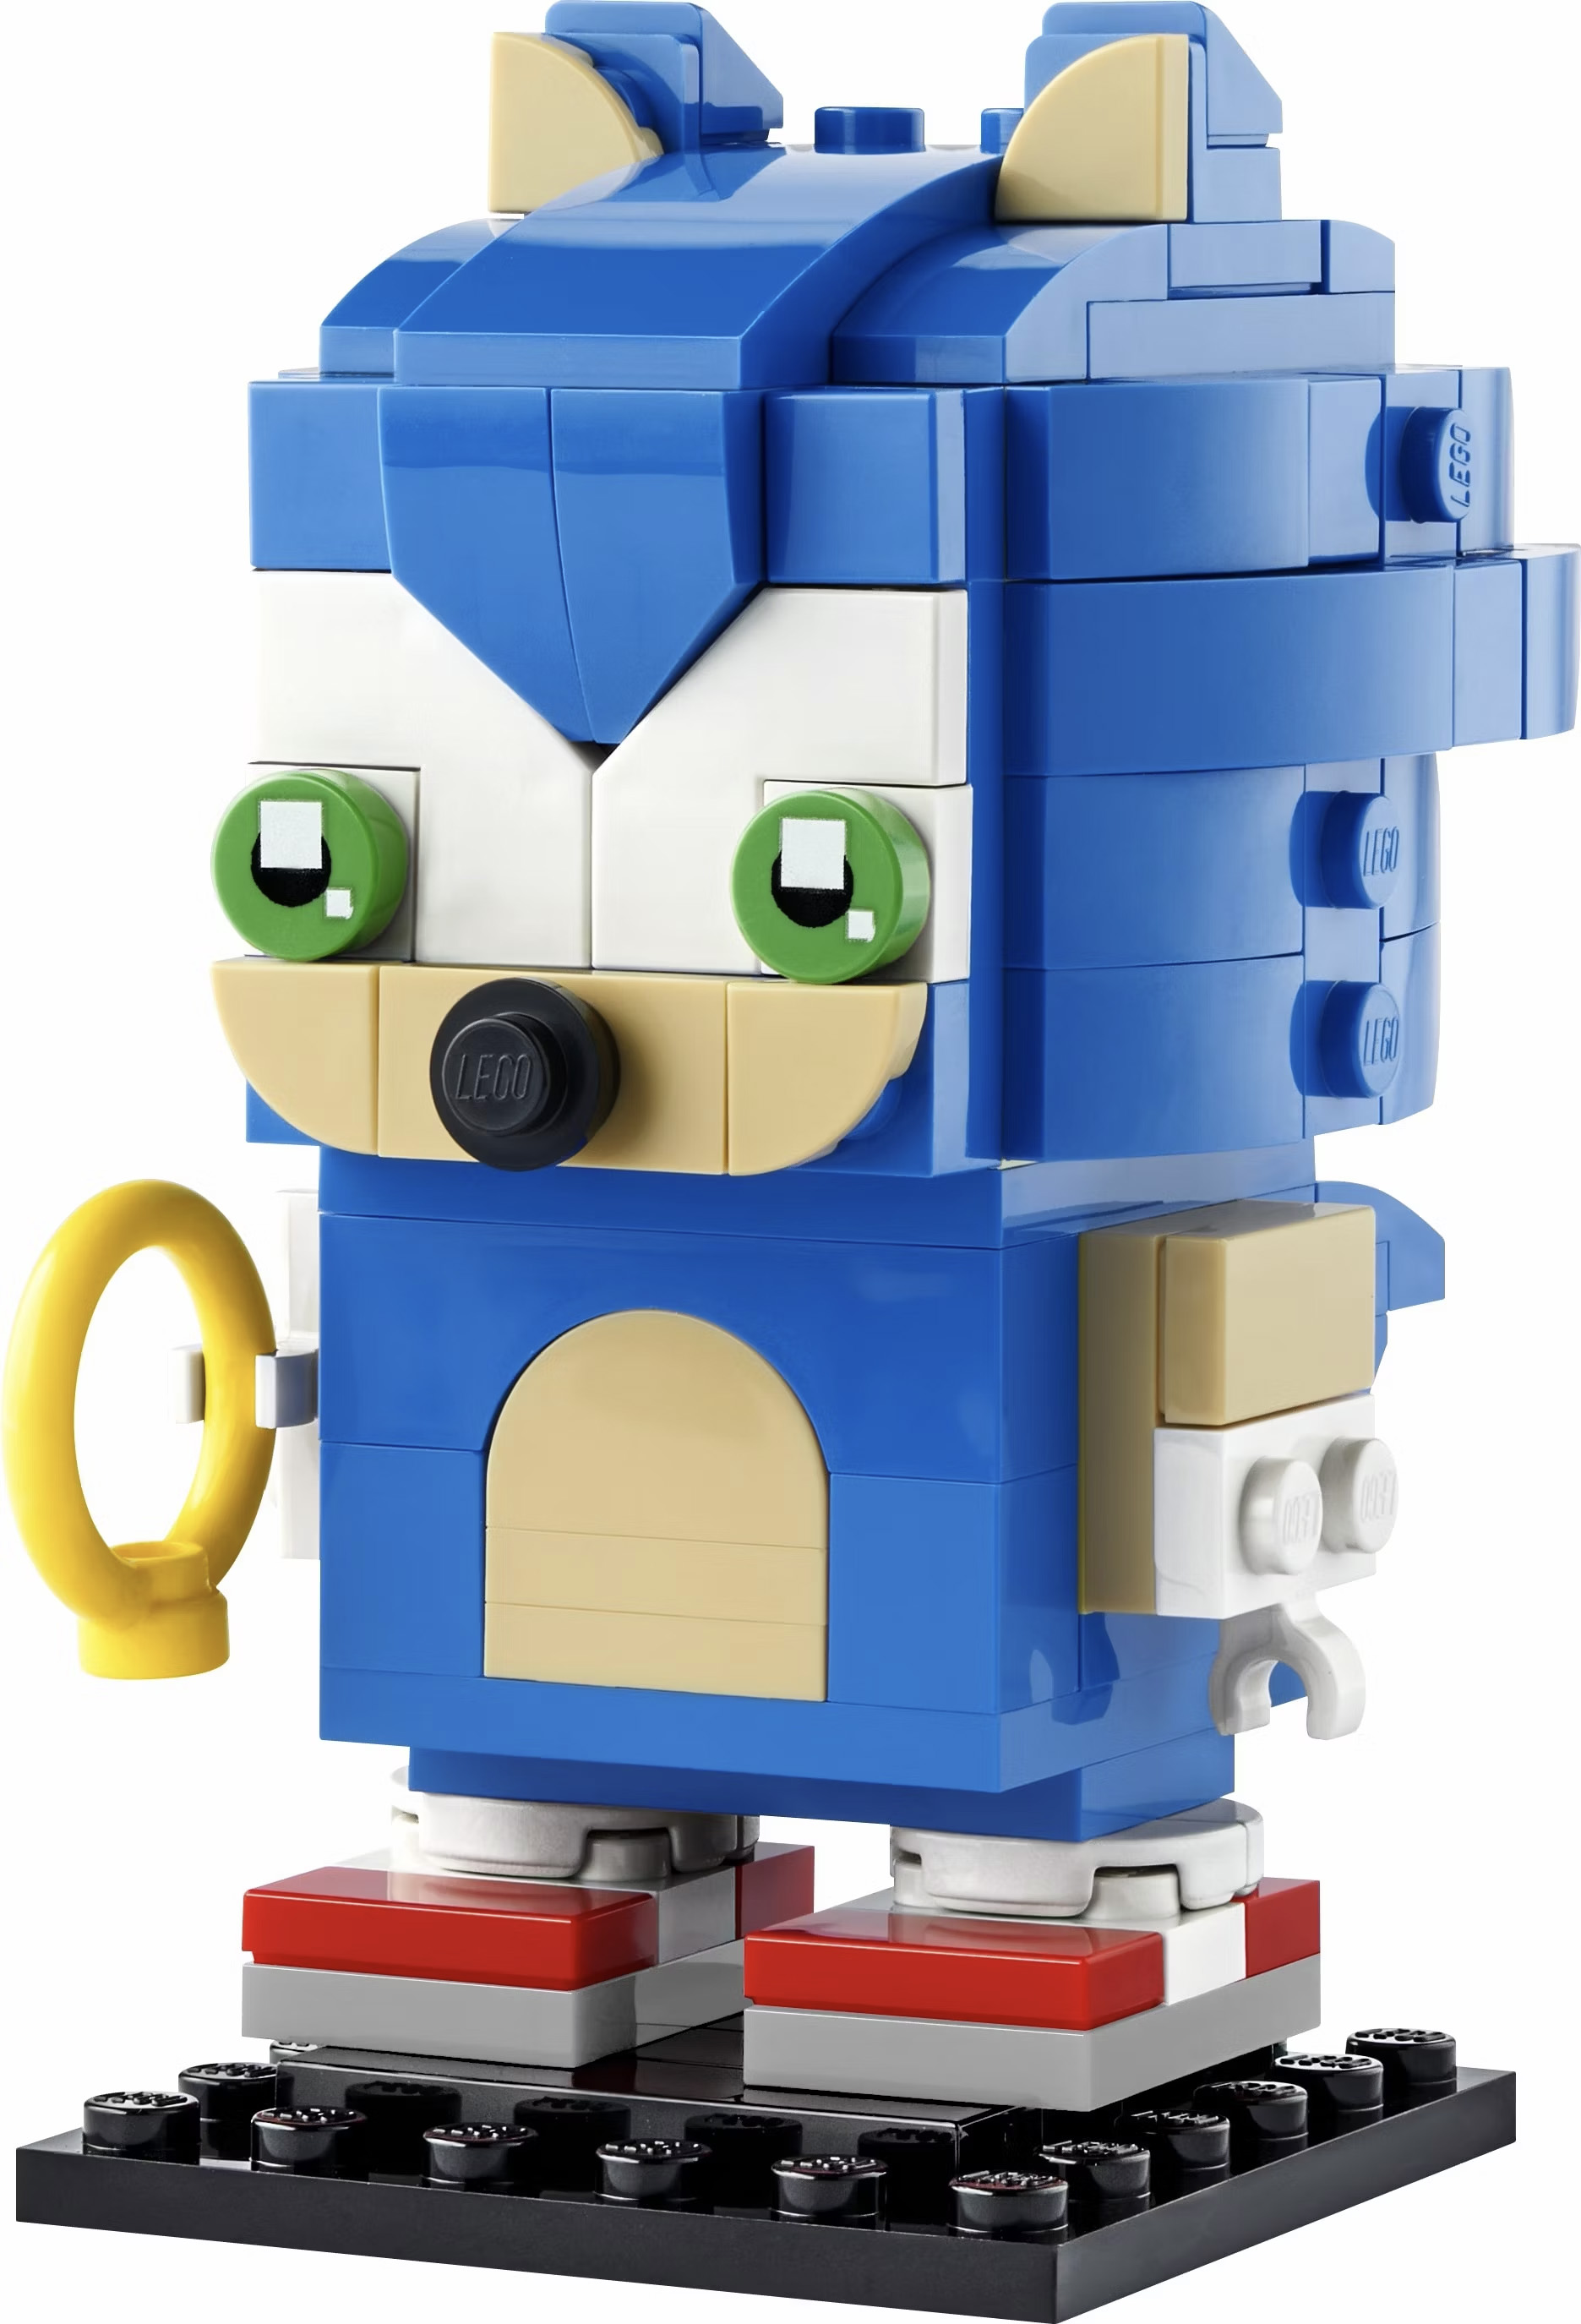 More details on rumoured LEGO Sonic the Hedgehog 2023 sets